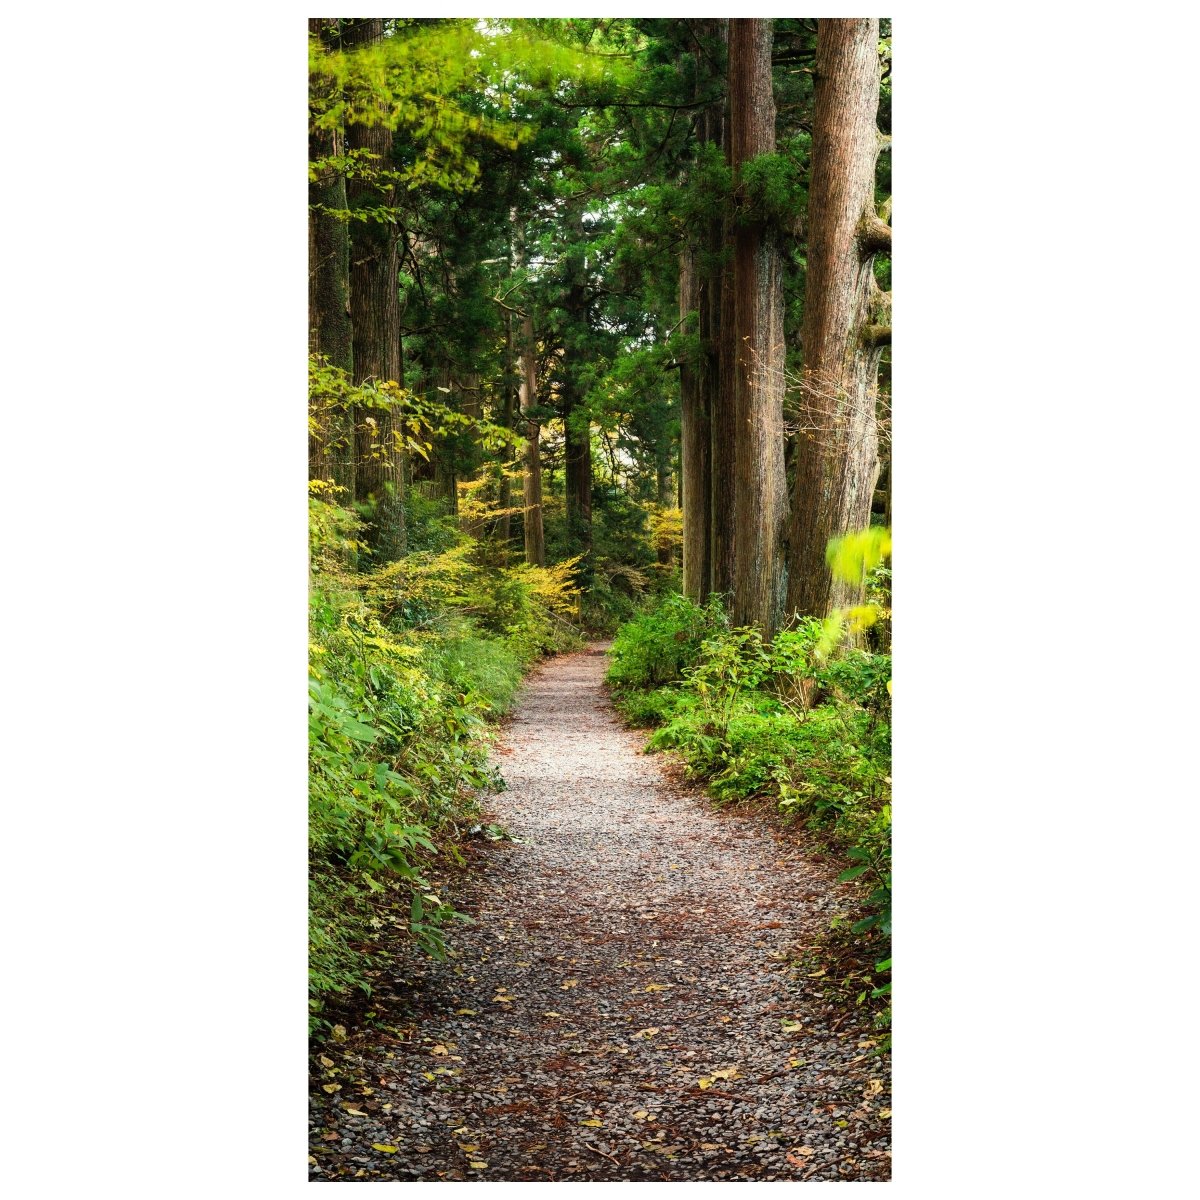 Türtapete Wander-weg in altem Wald, Bäume, Natur M1131 - Bild 2